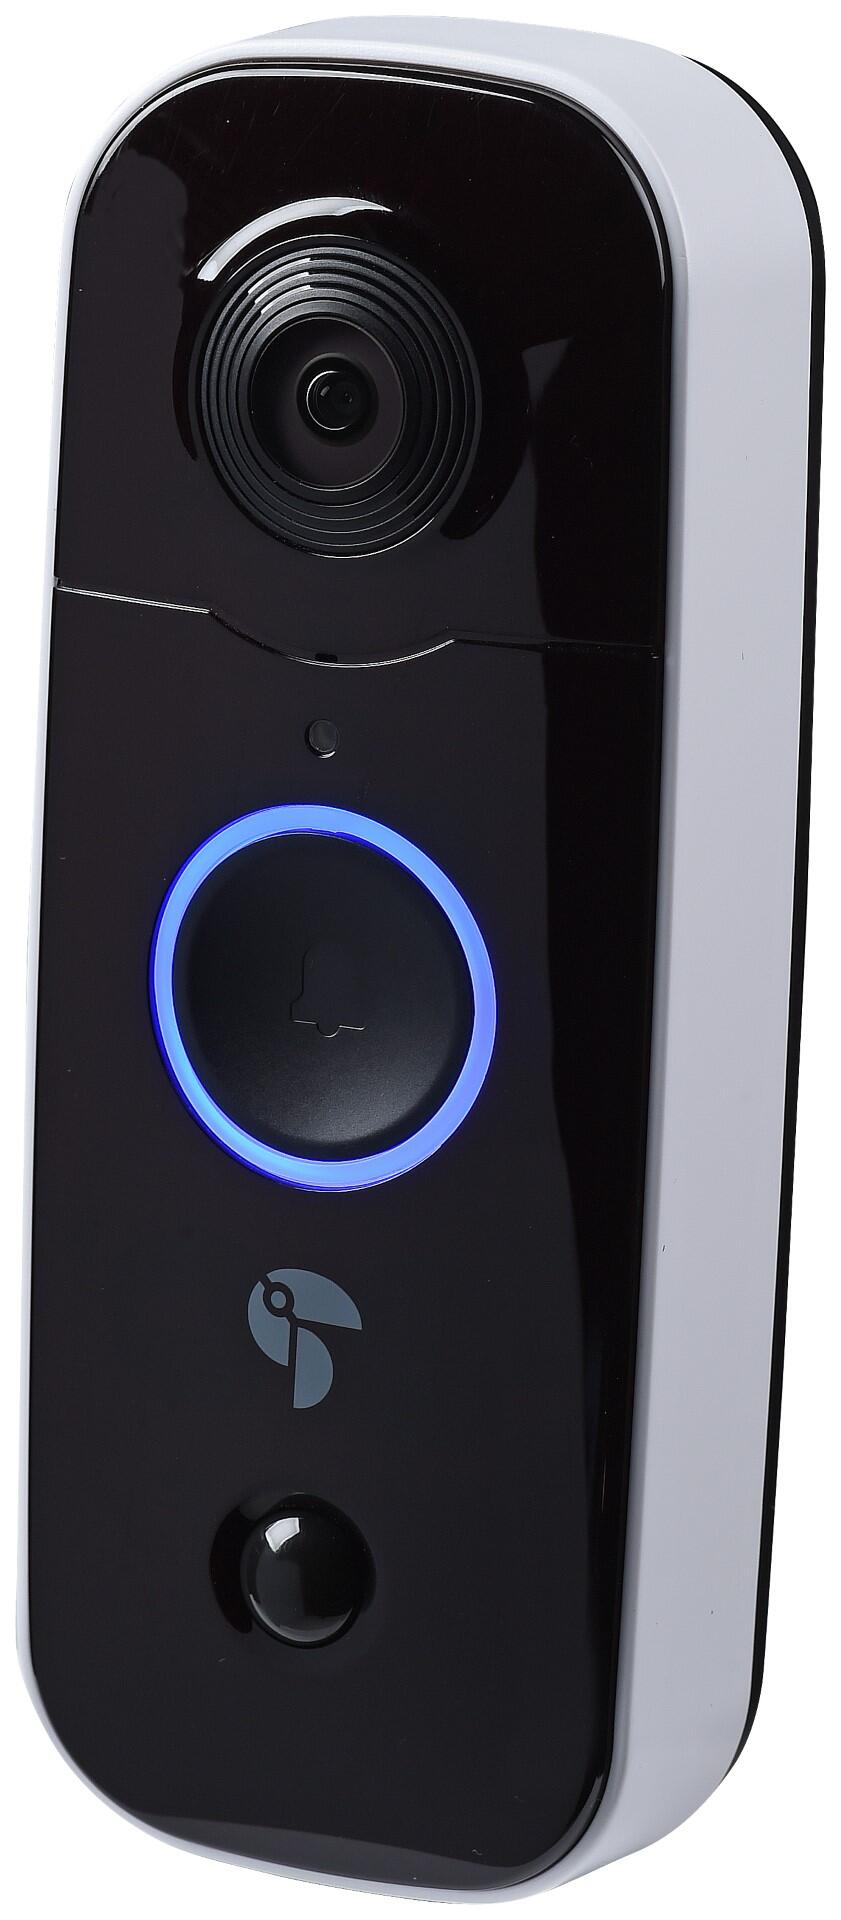 TVD200WUC Wireless Video Doorbell Toucan